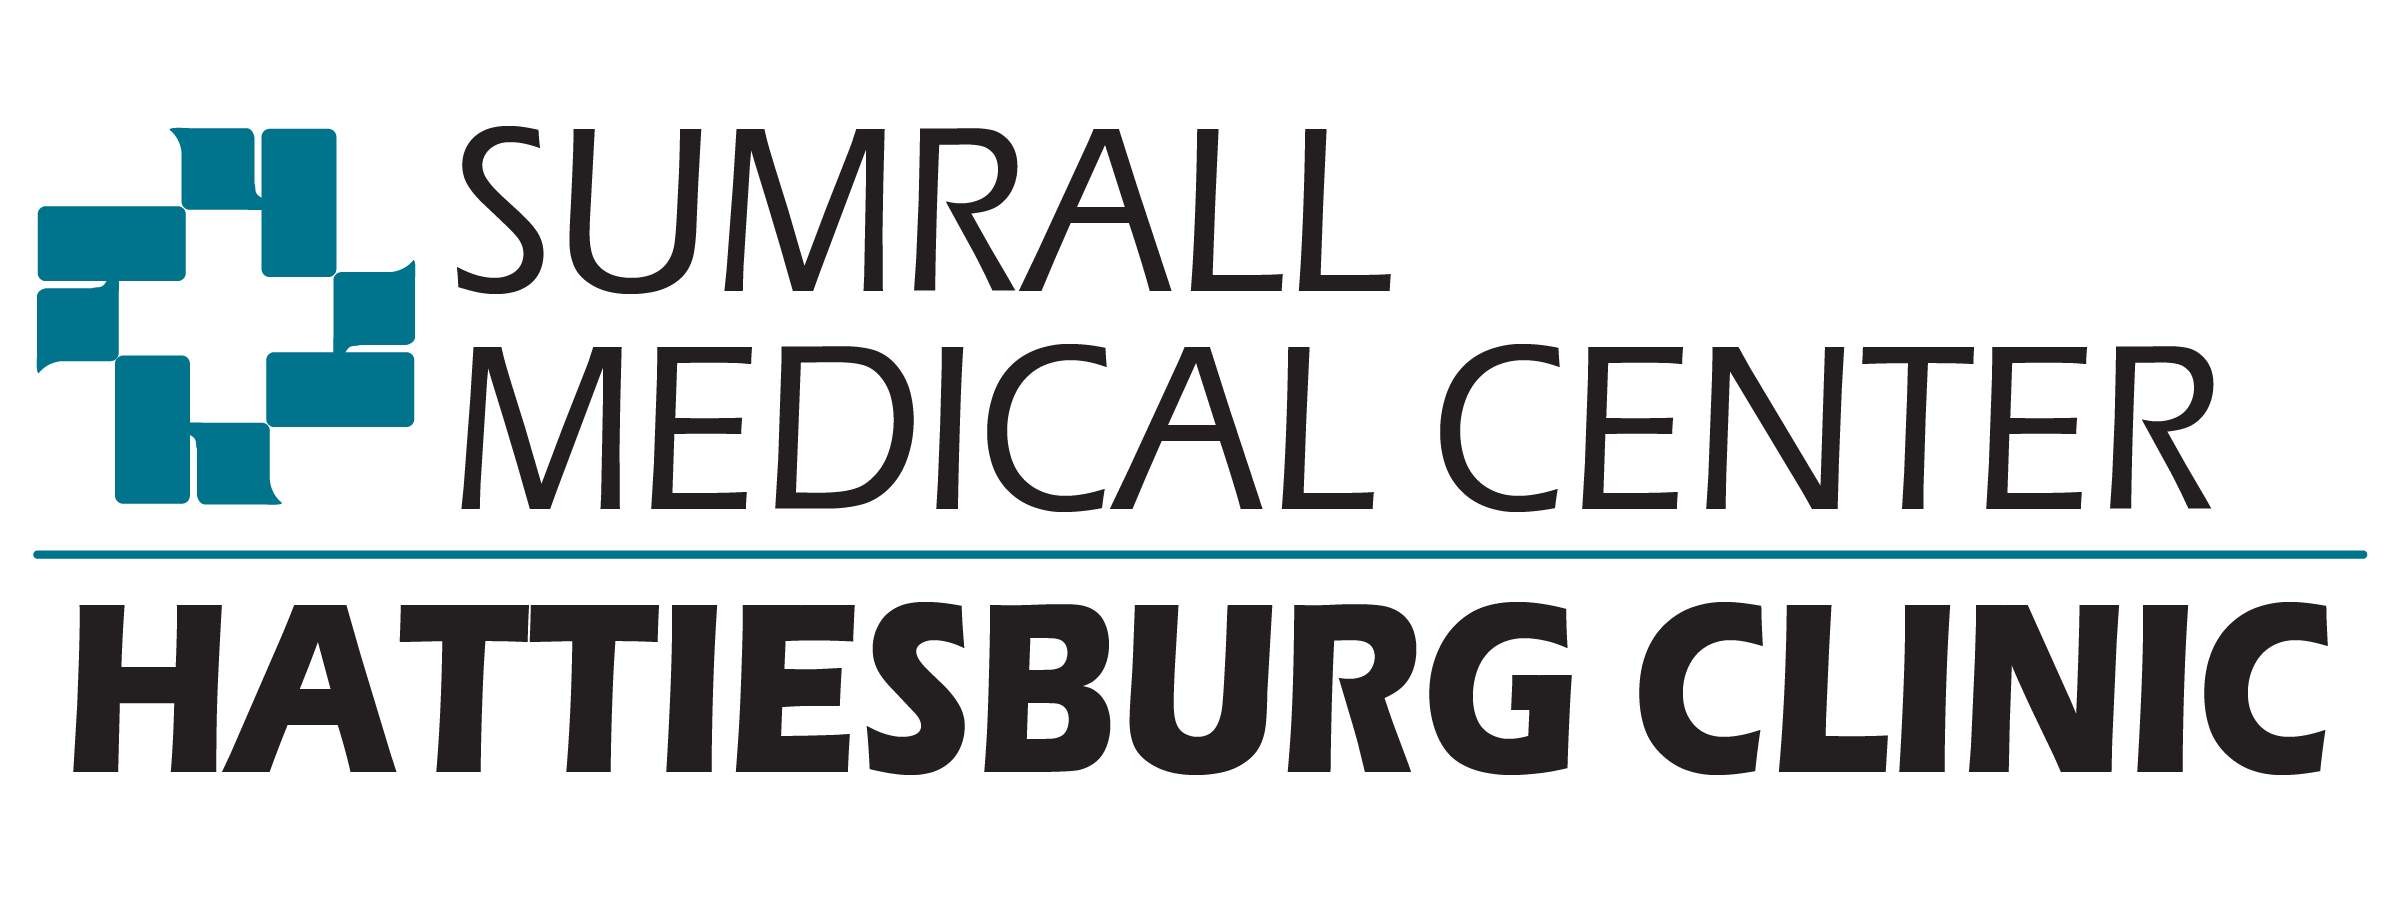 Sumrall Medical Center logo